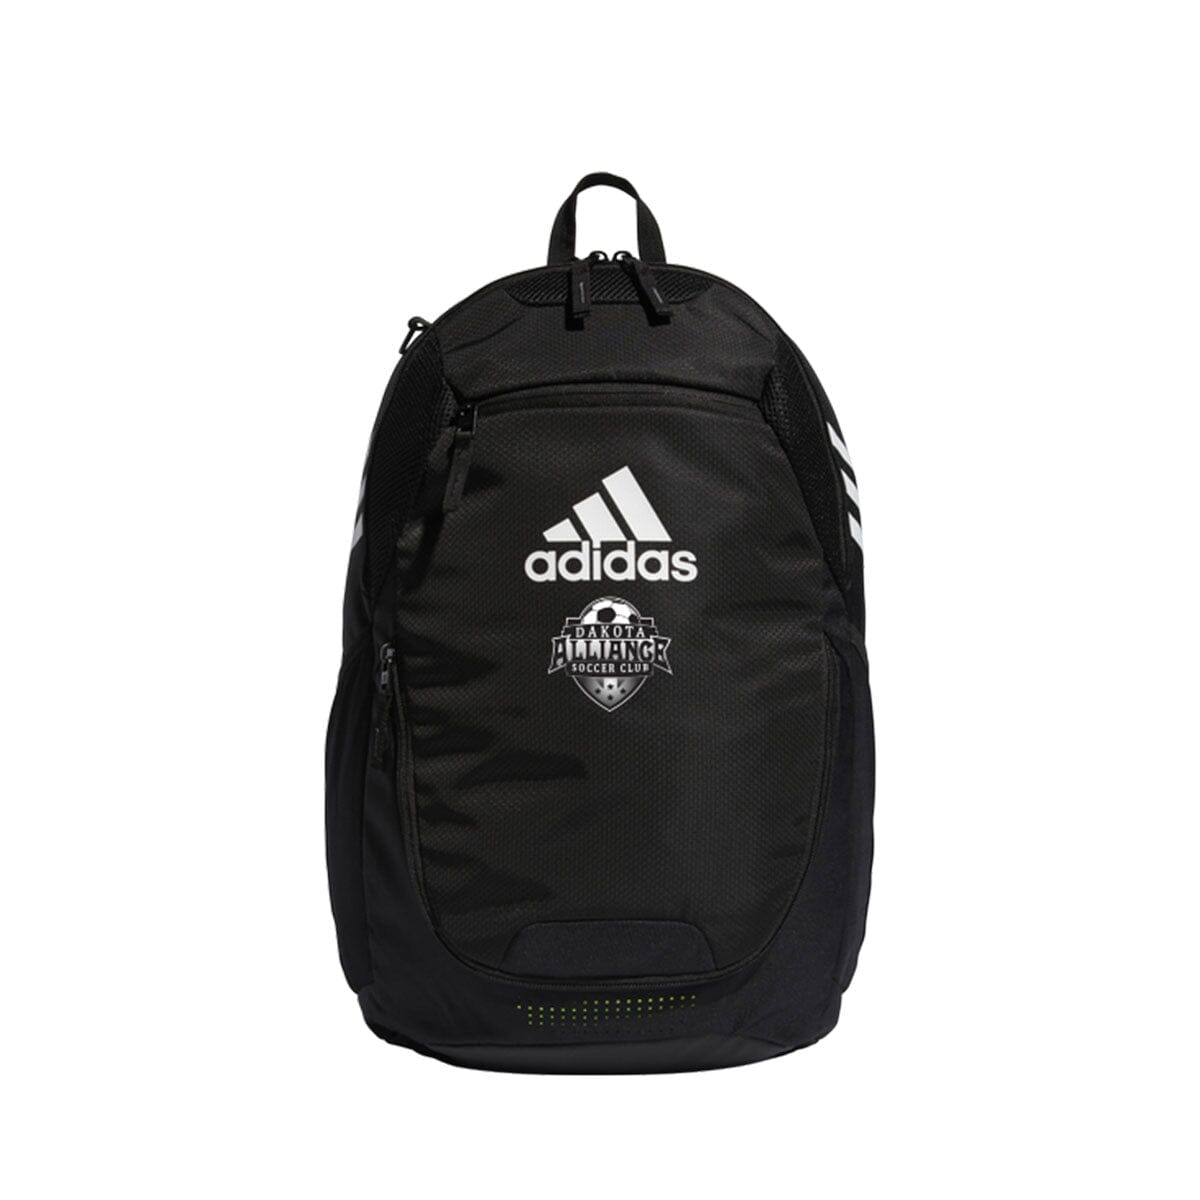 DASC Fall '23 adidas Stadium III Backpack - Black Shorts Adidas Black 